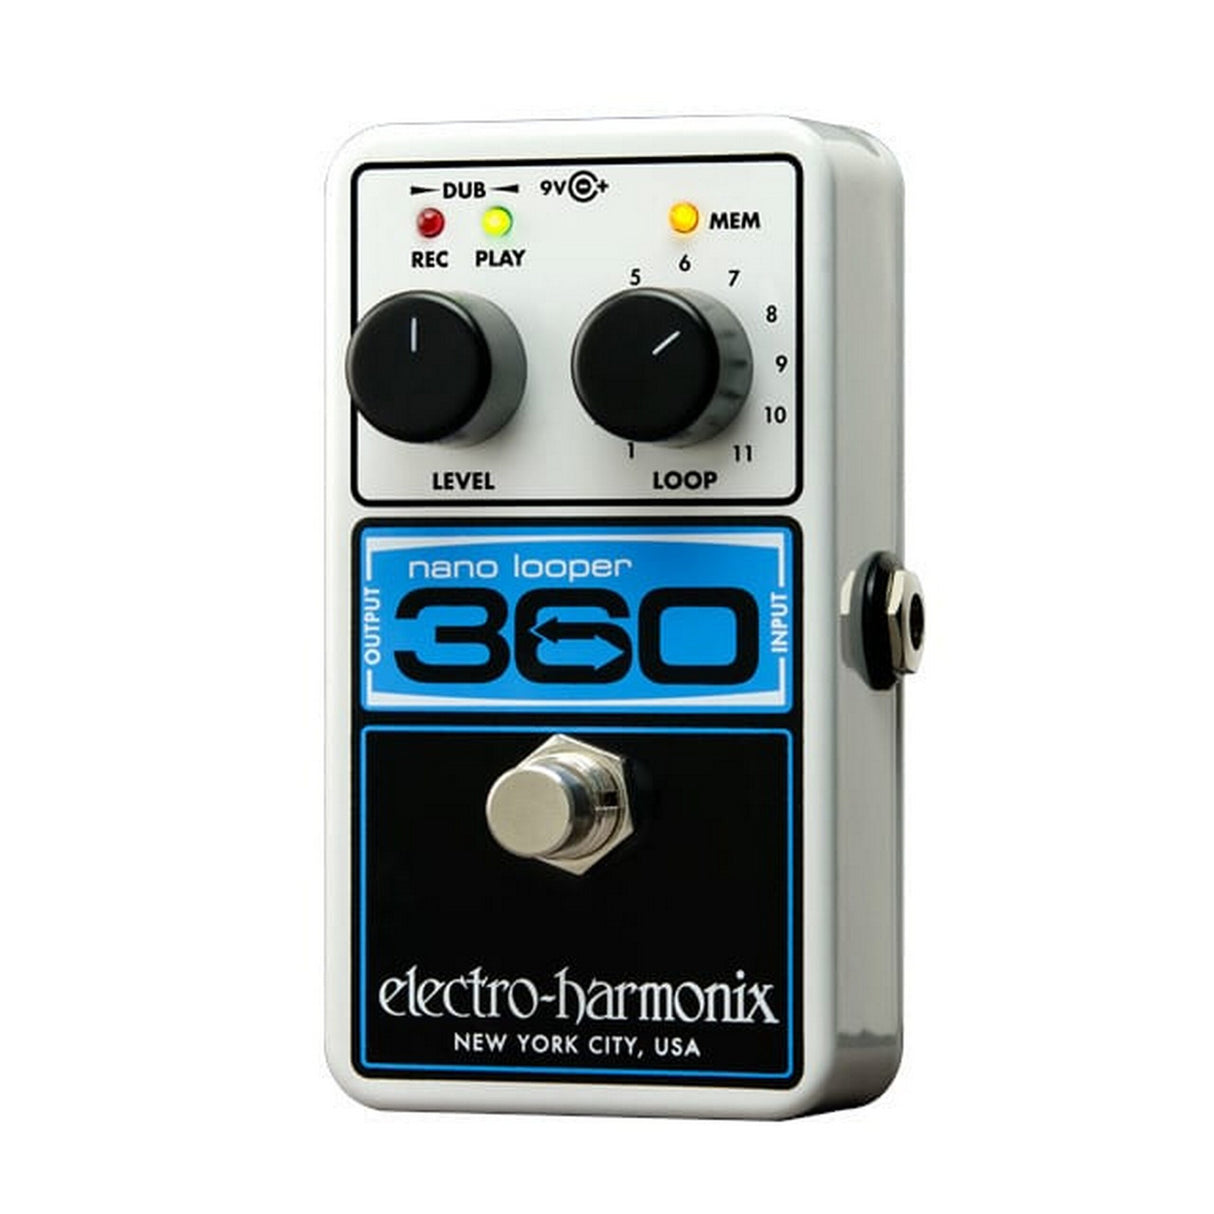 Electro-Harmonix Nano Looper 360 Compact Guitar Effects Pedal